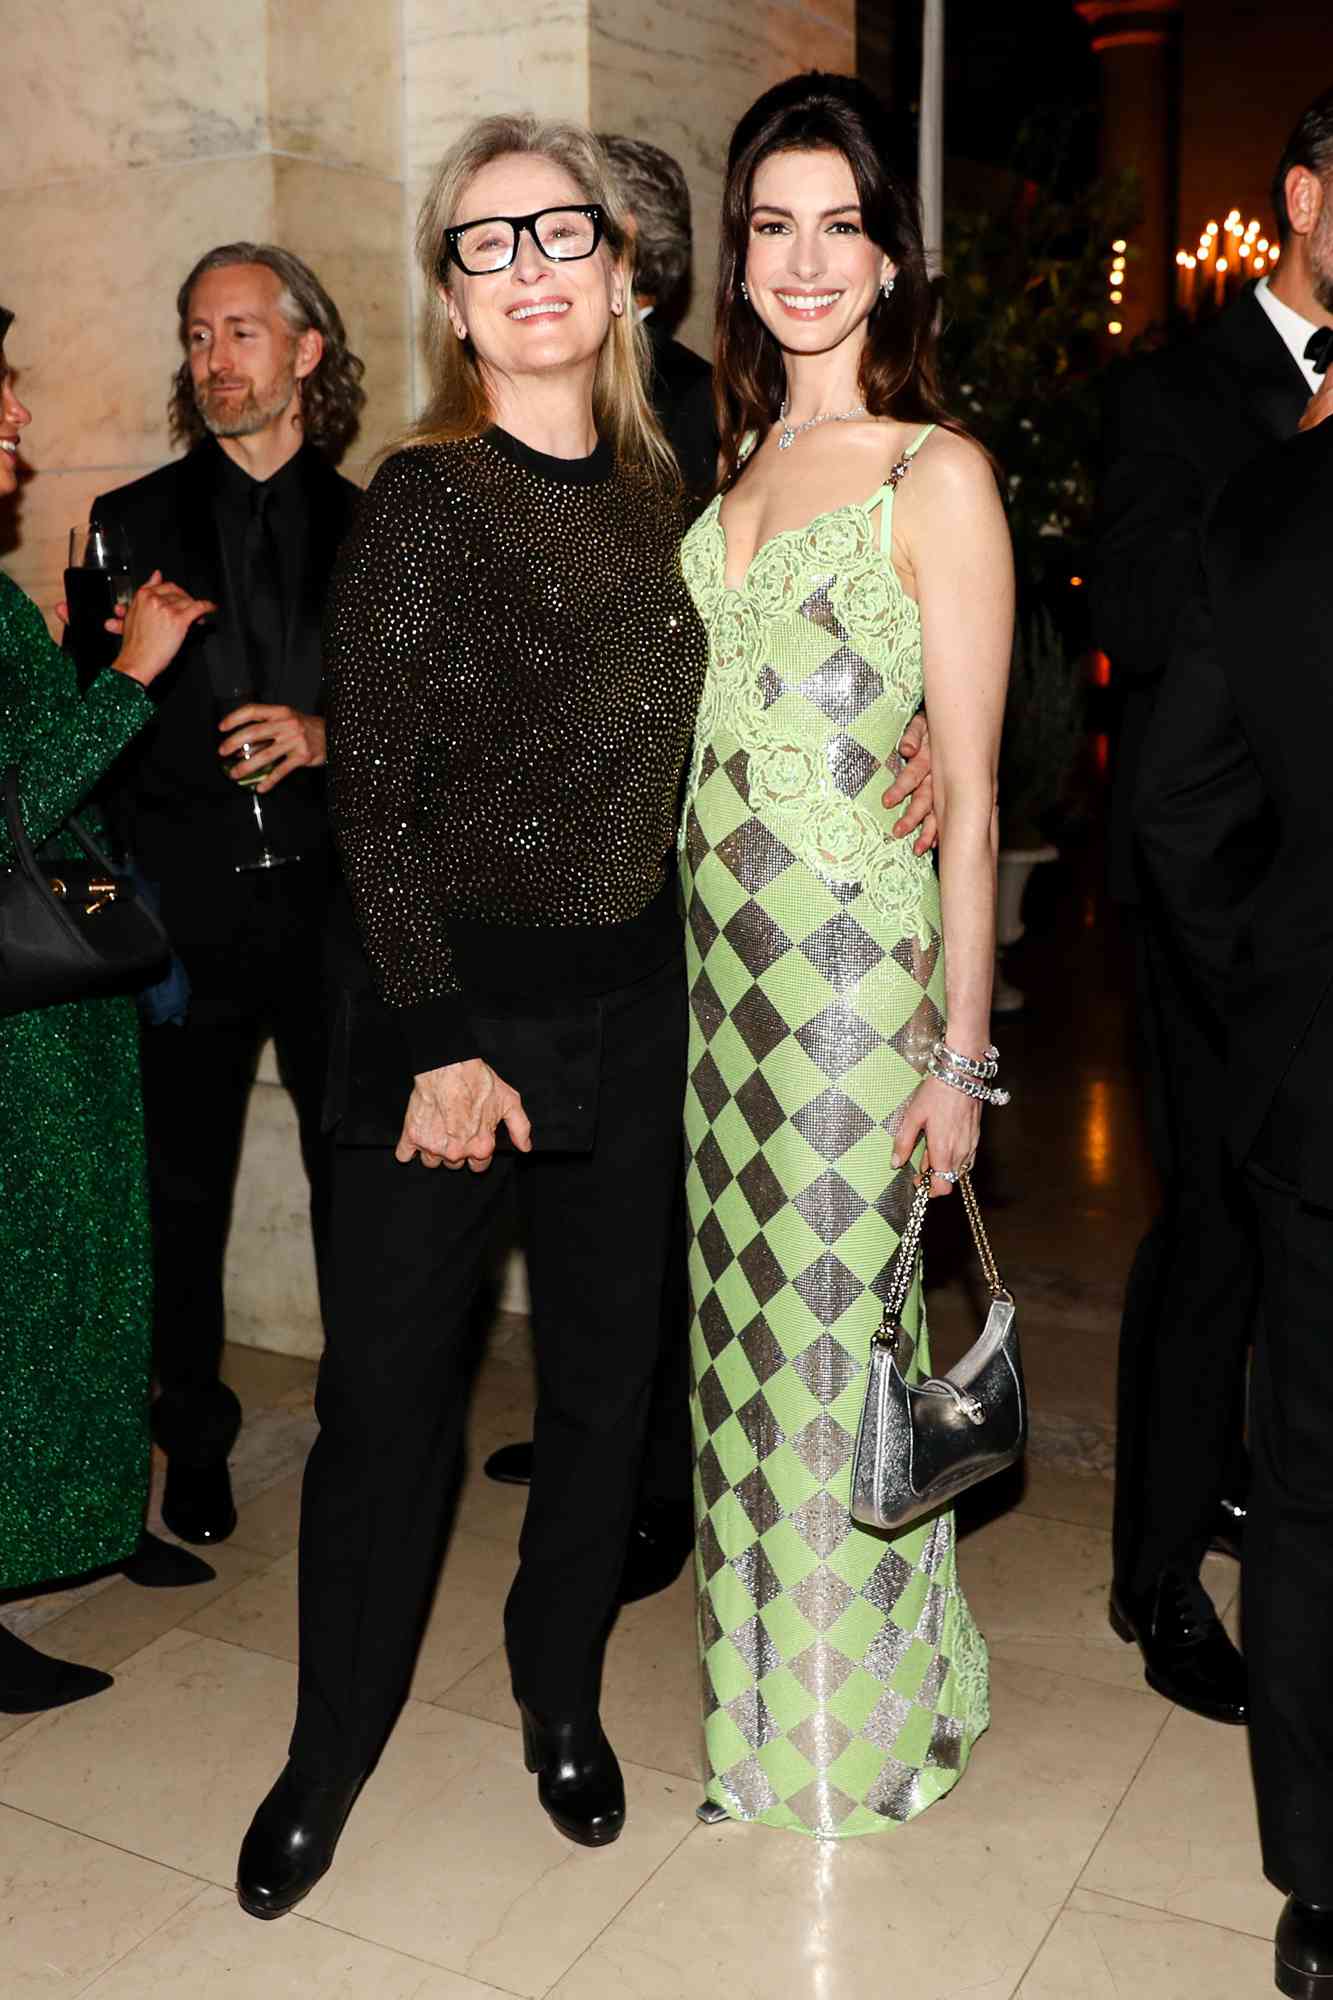 Meryl Streep and Anne Hathaway together again